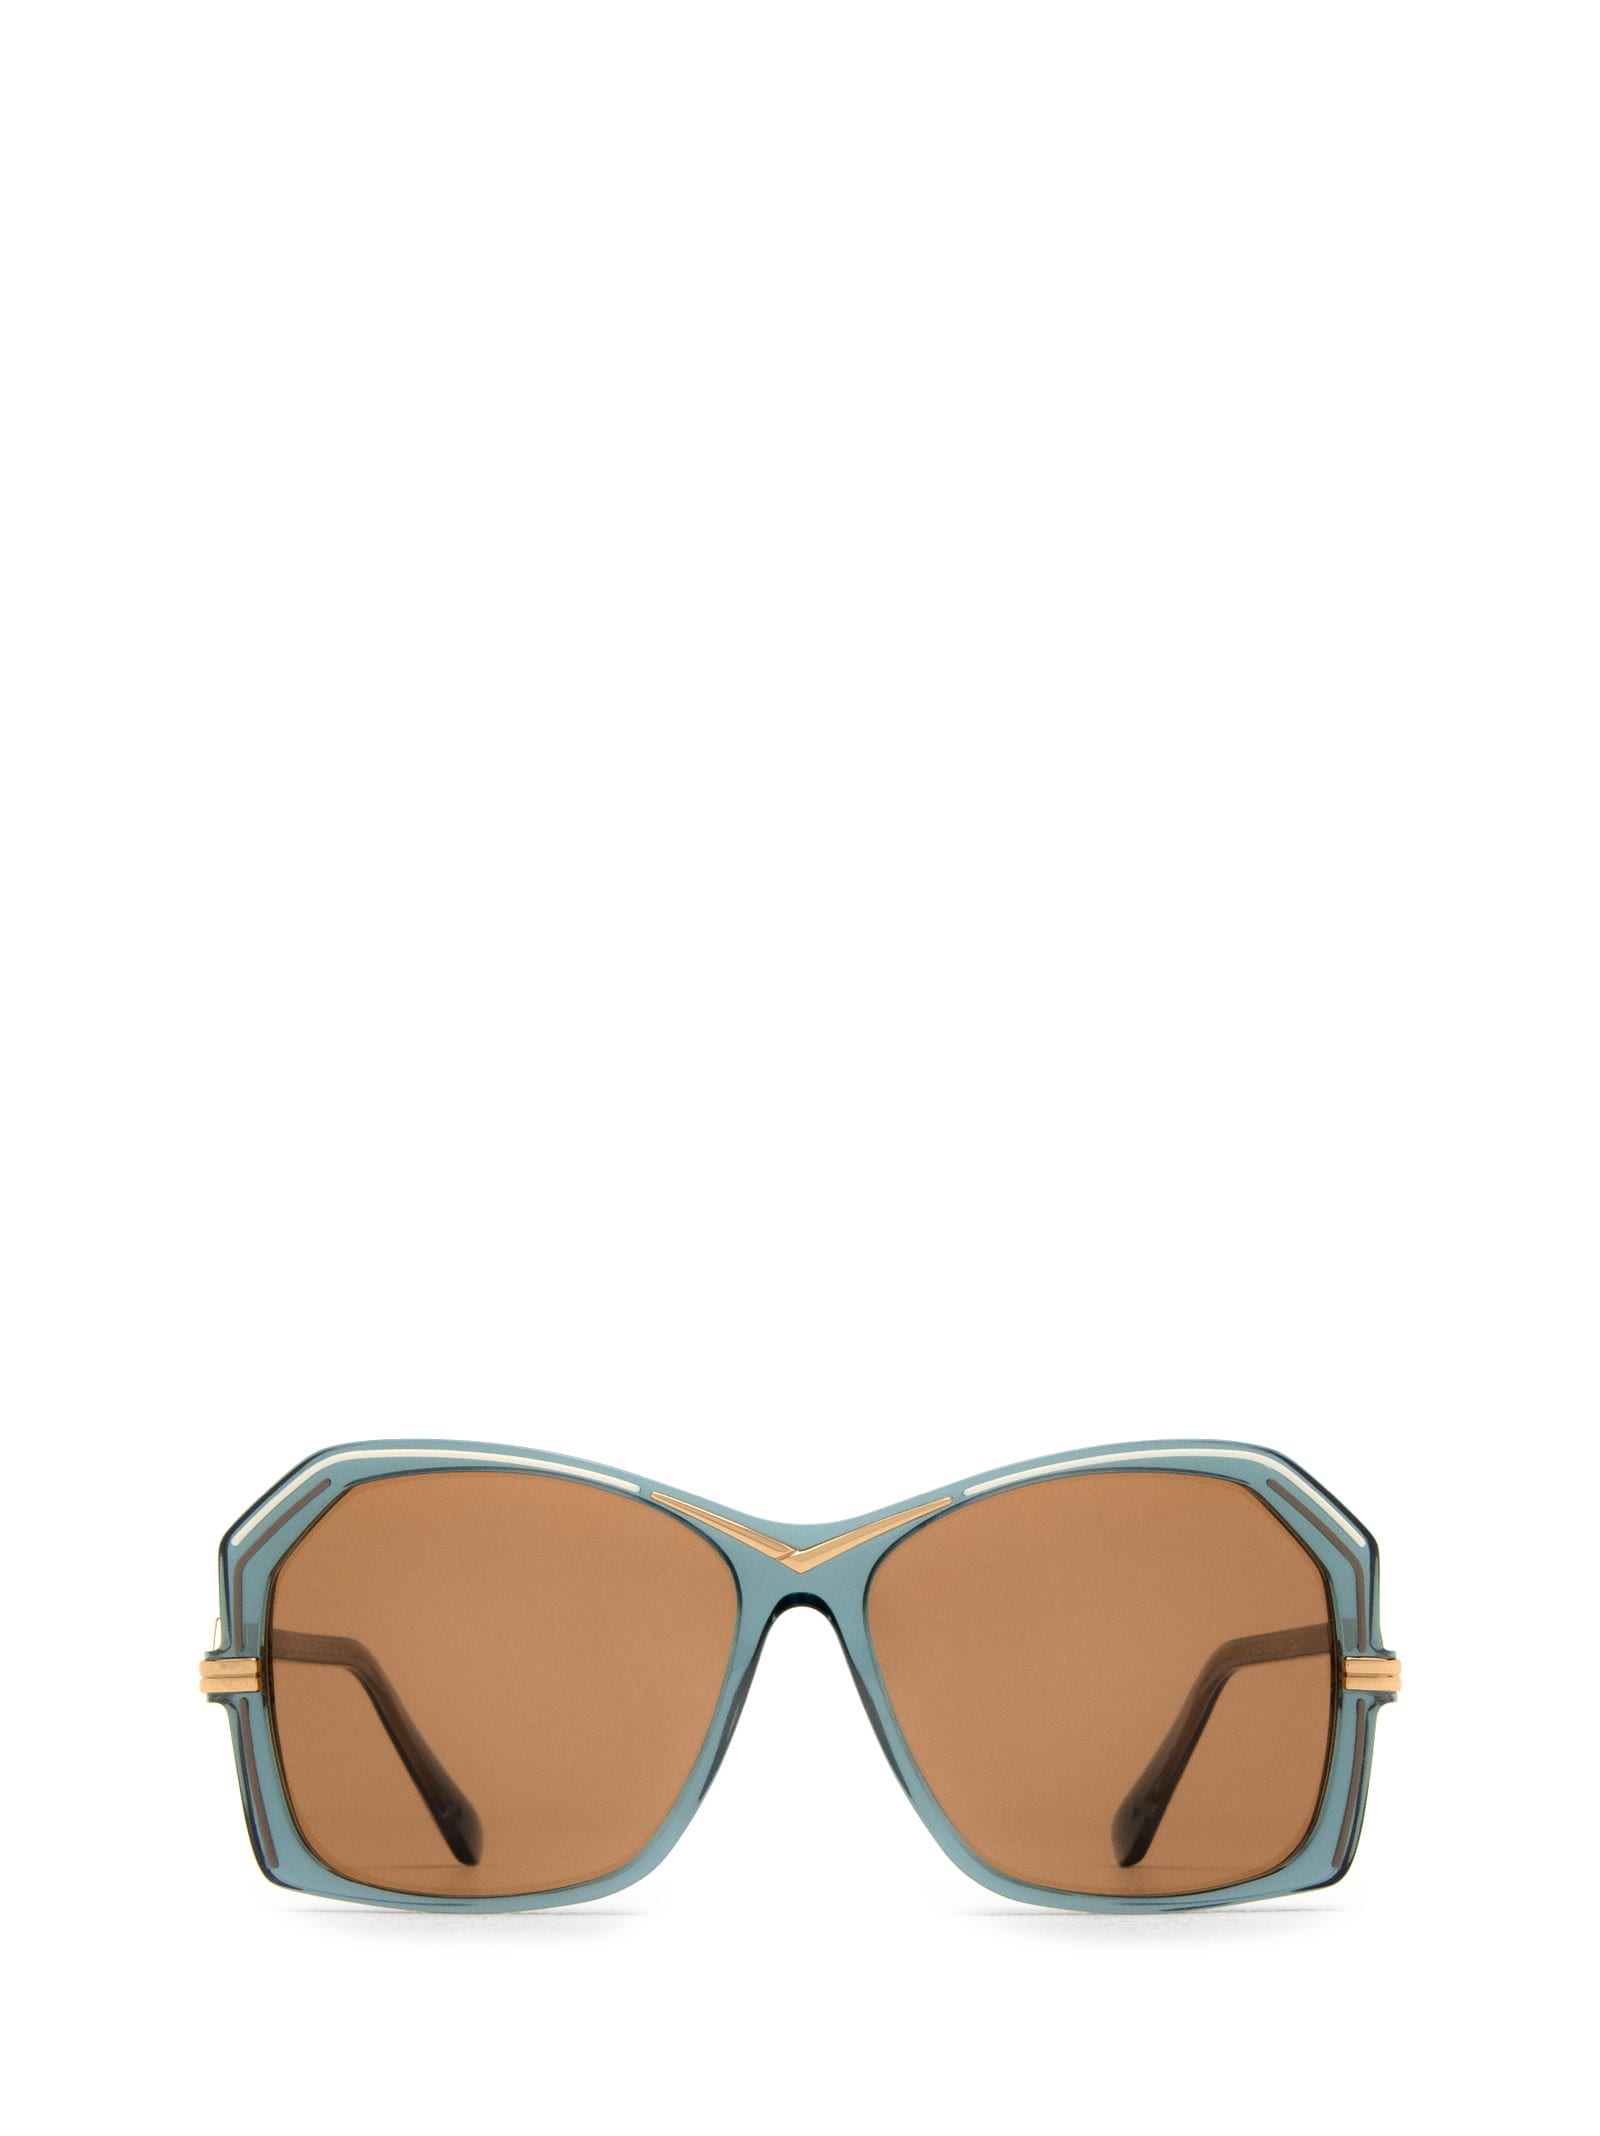 Cazal 8510 Mint - Milky White Sunglasses